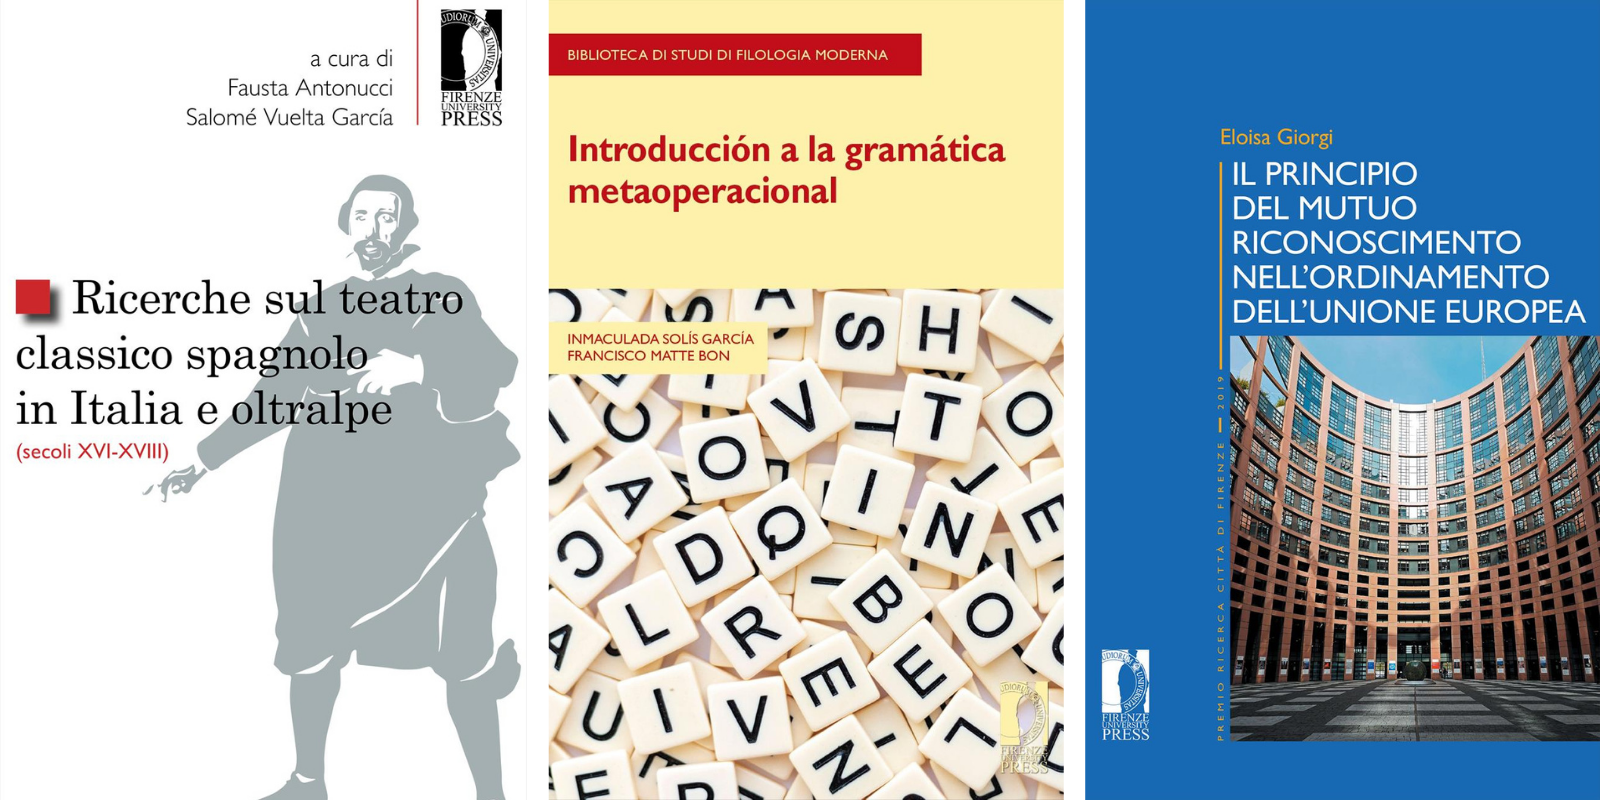 New OA Database: Firenze University Press